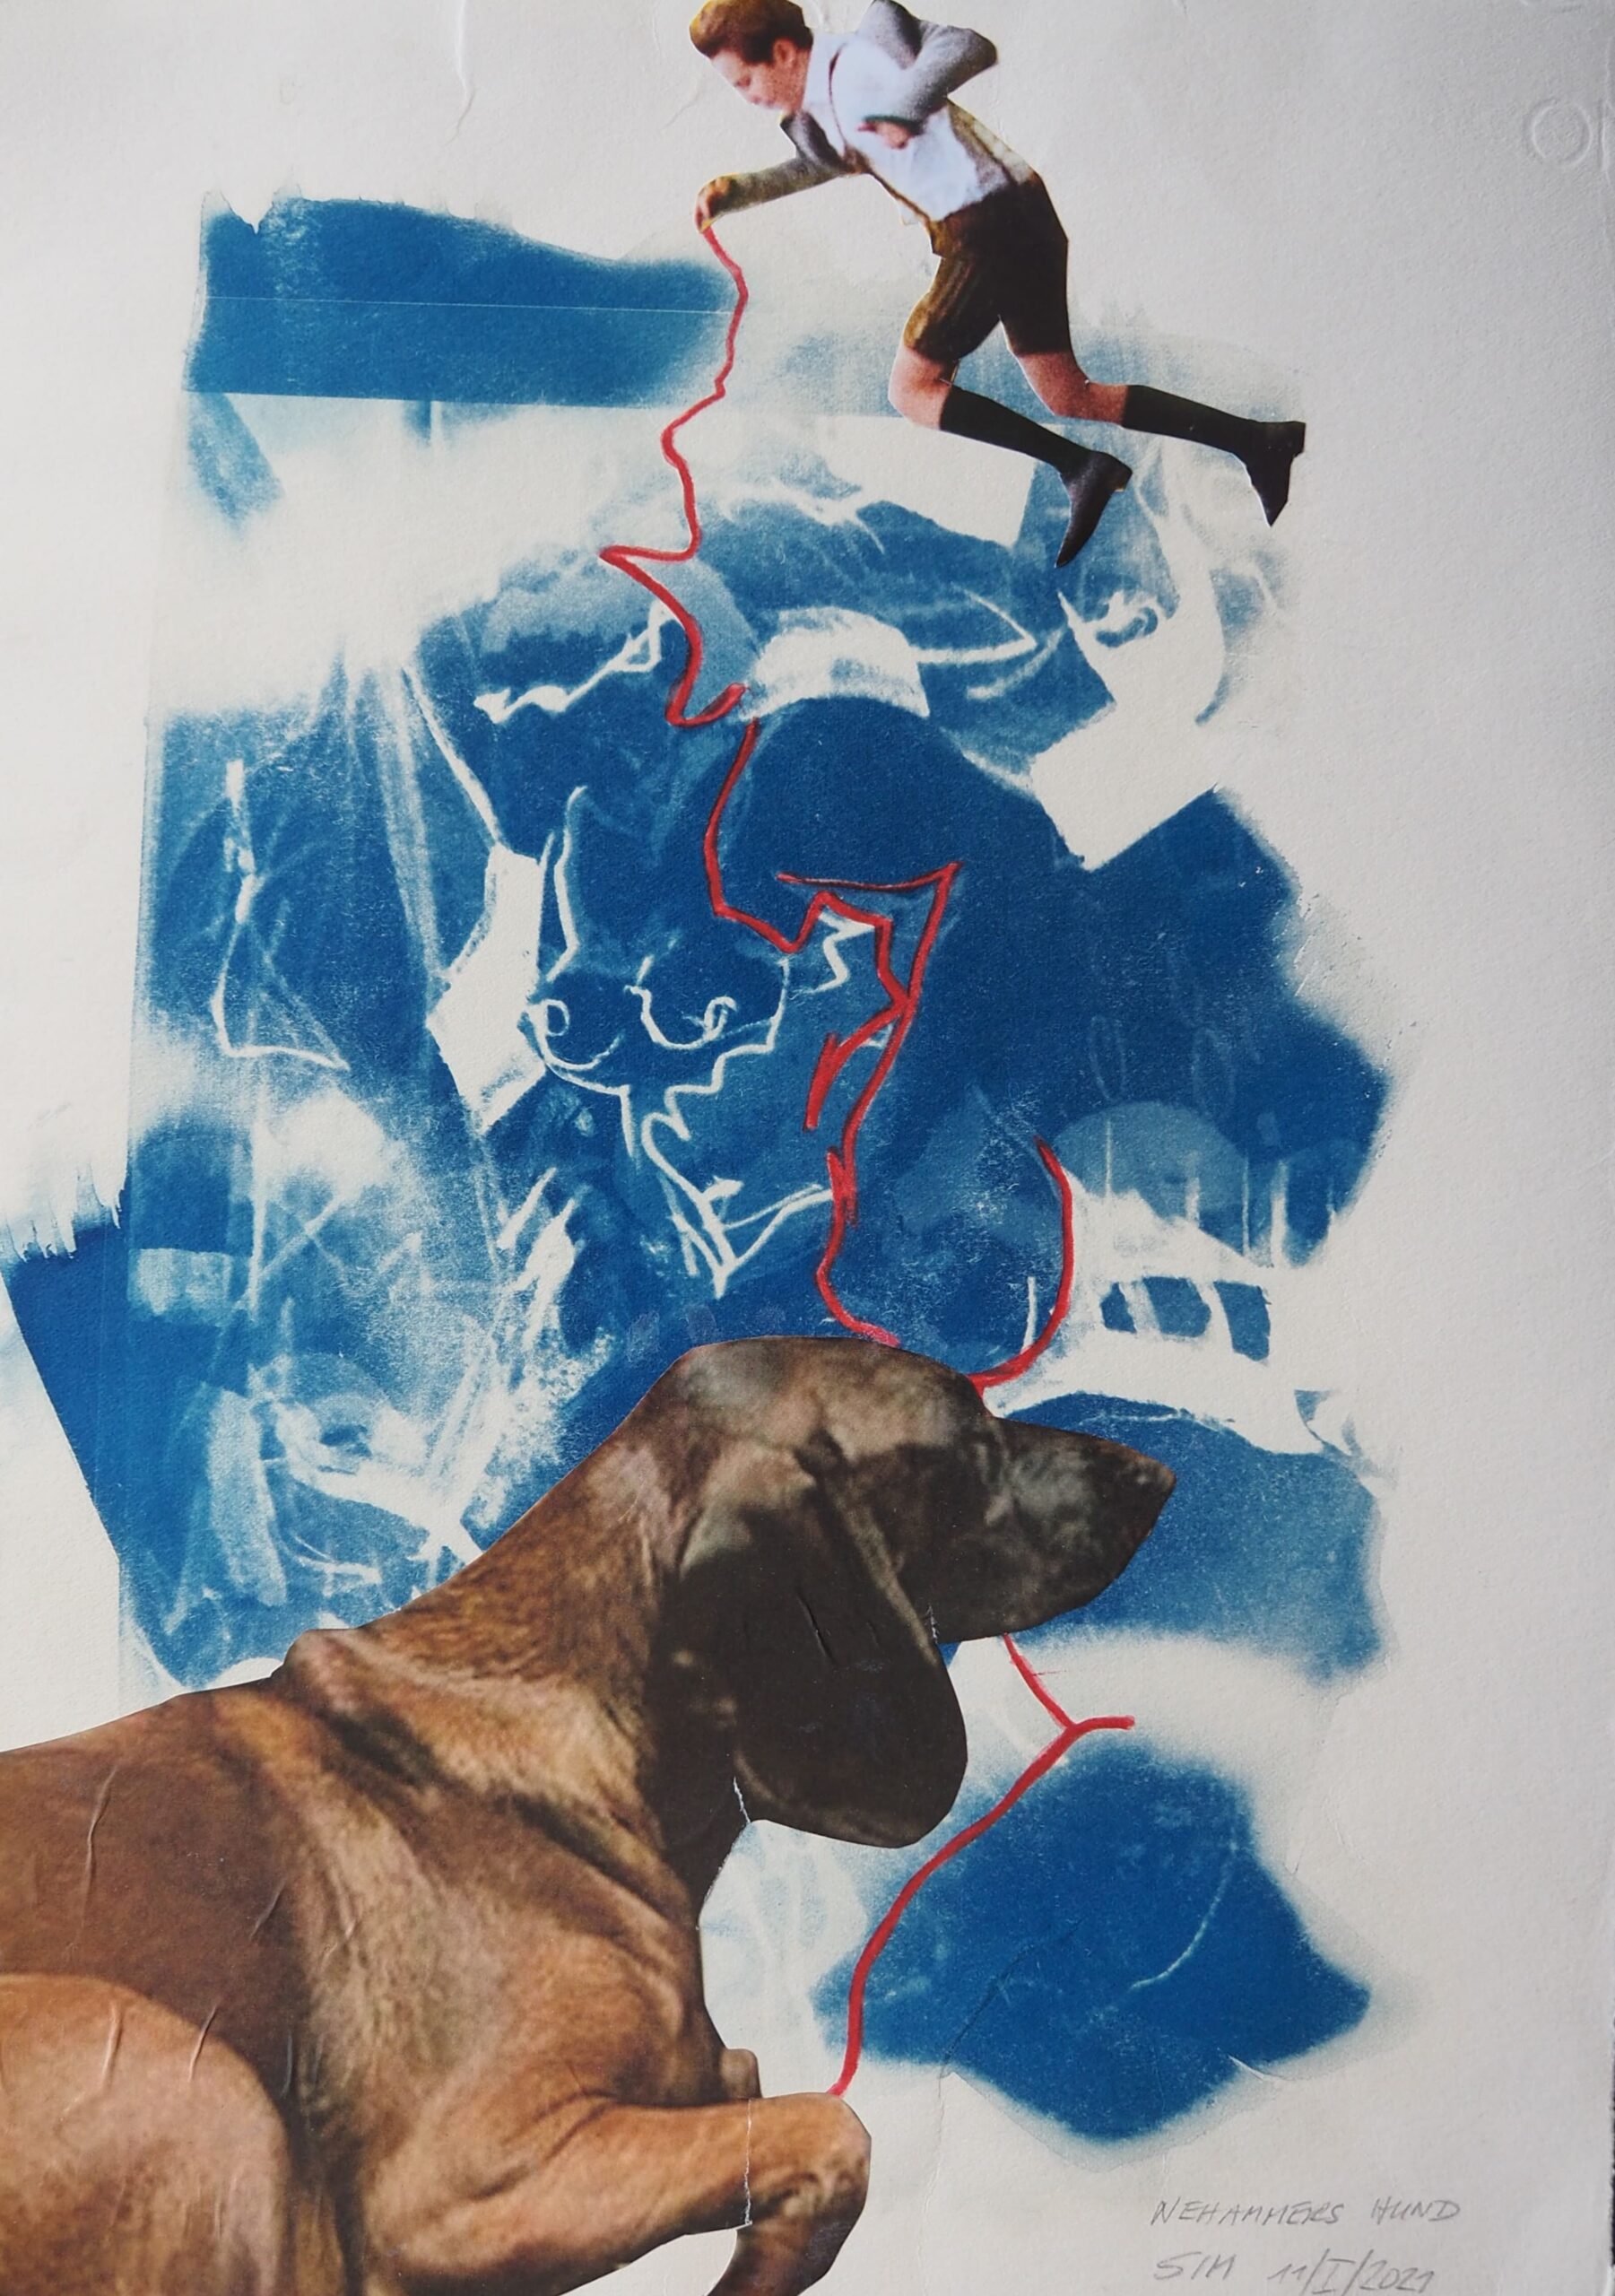 Nehammers Hund, 2022, Cyanocollage, 50 x 40 cm